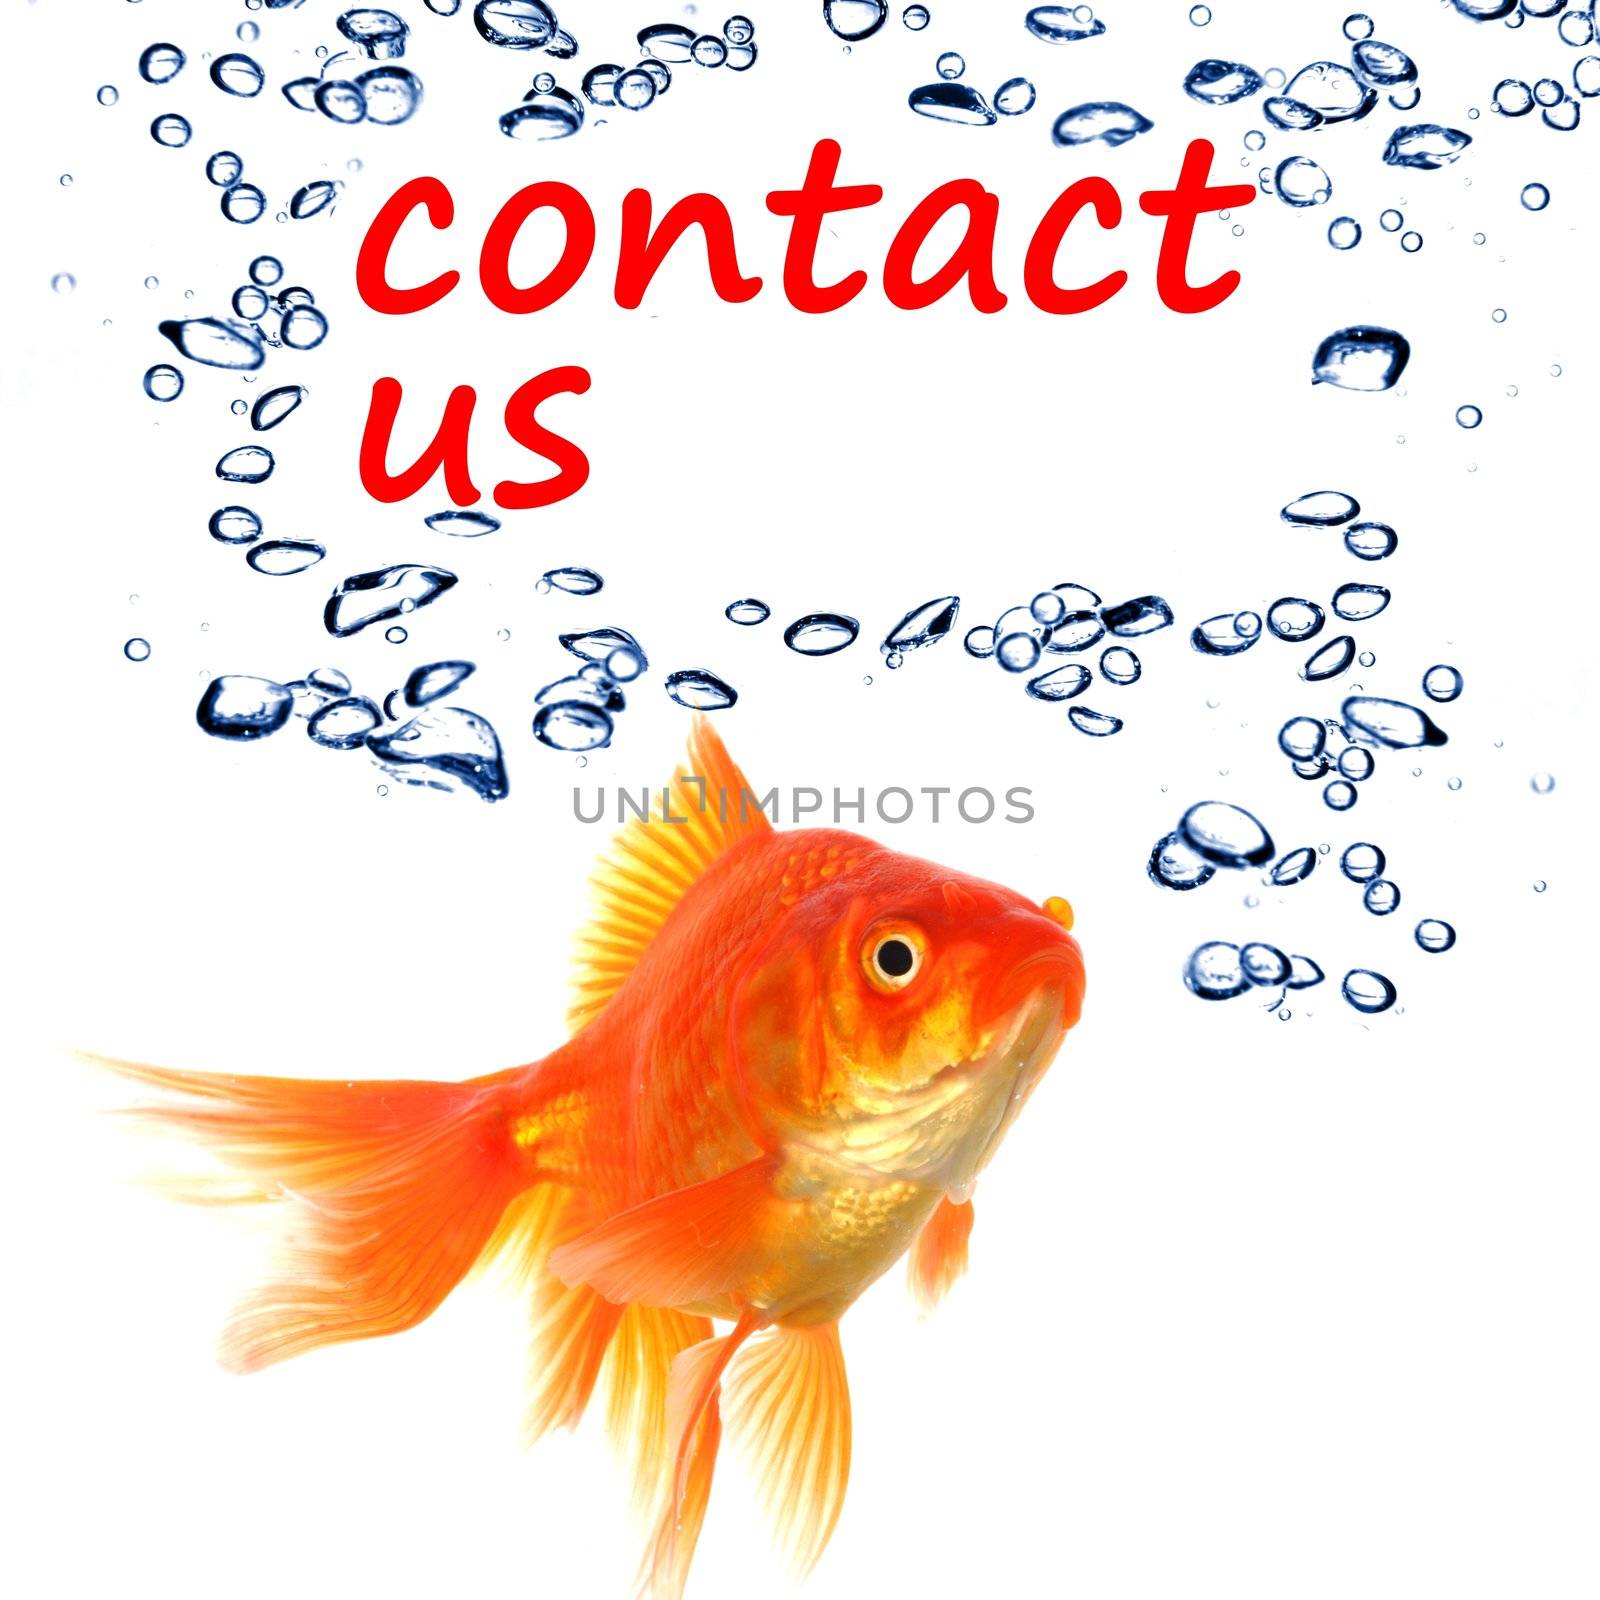 contact us by gunnar3000